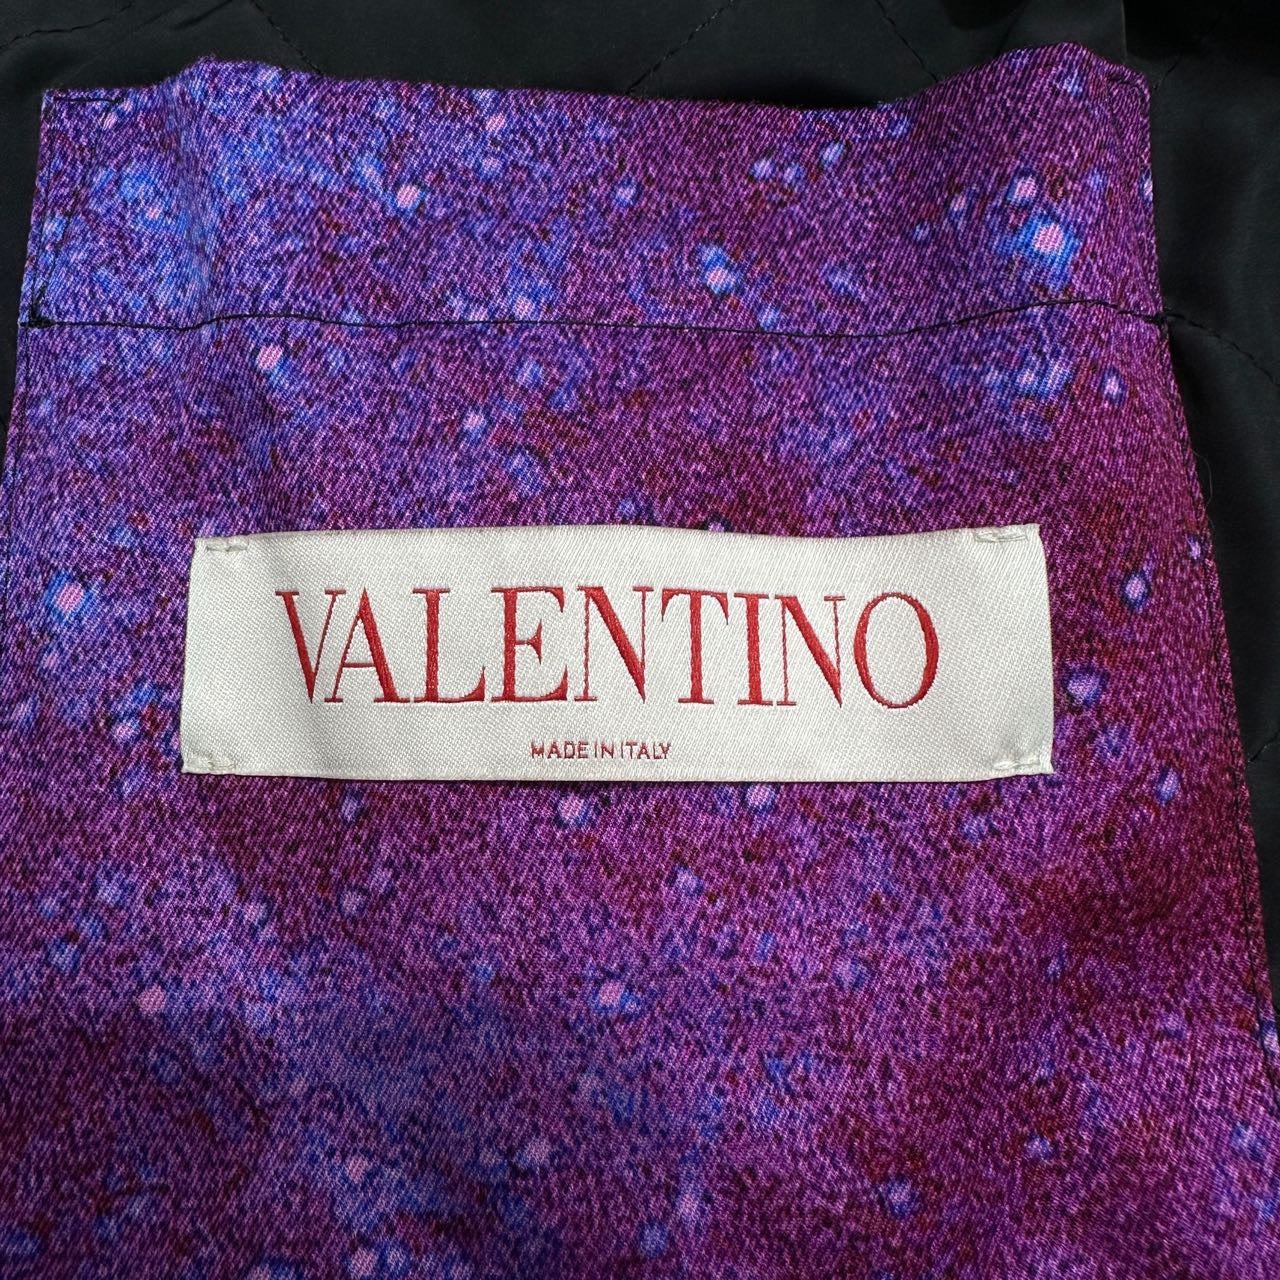 Valentino "Water and Sky" Printed Jacket - 3